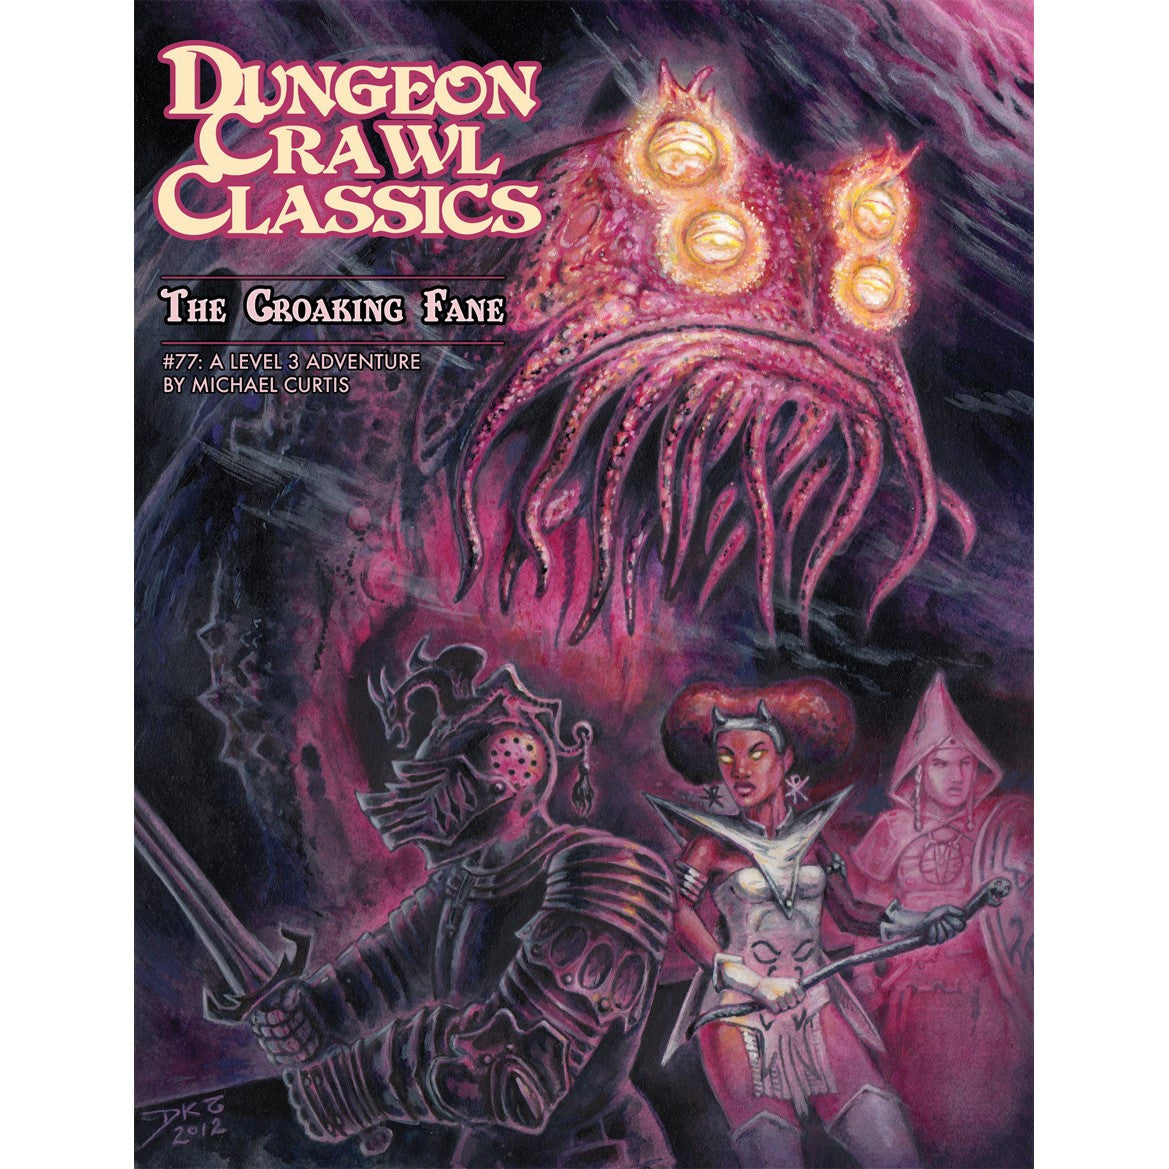 Dungeon Crawl Classics 77 - The Croaking Fane